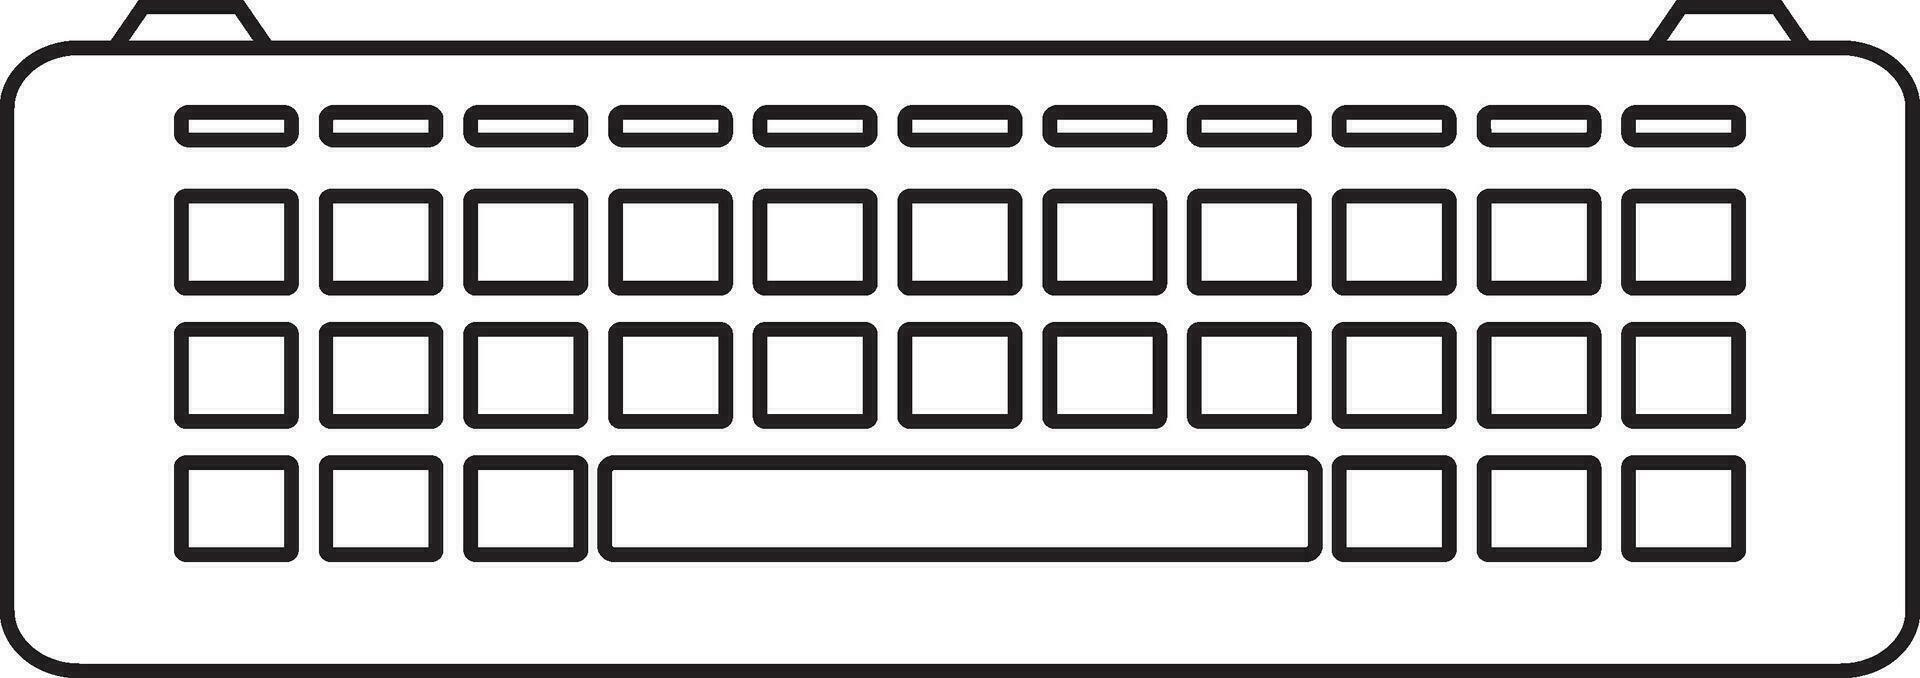 svart linje konst tangentbord i platt stil. vektor